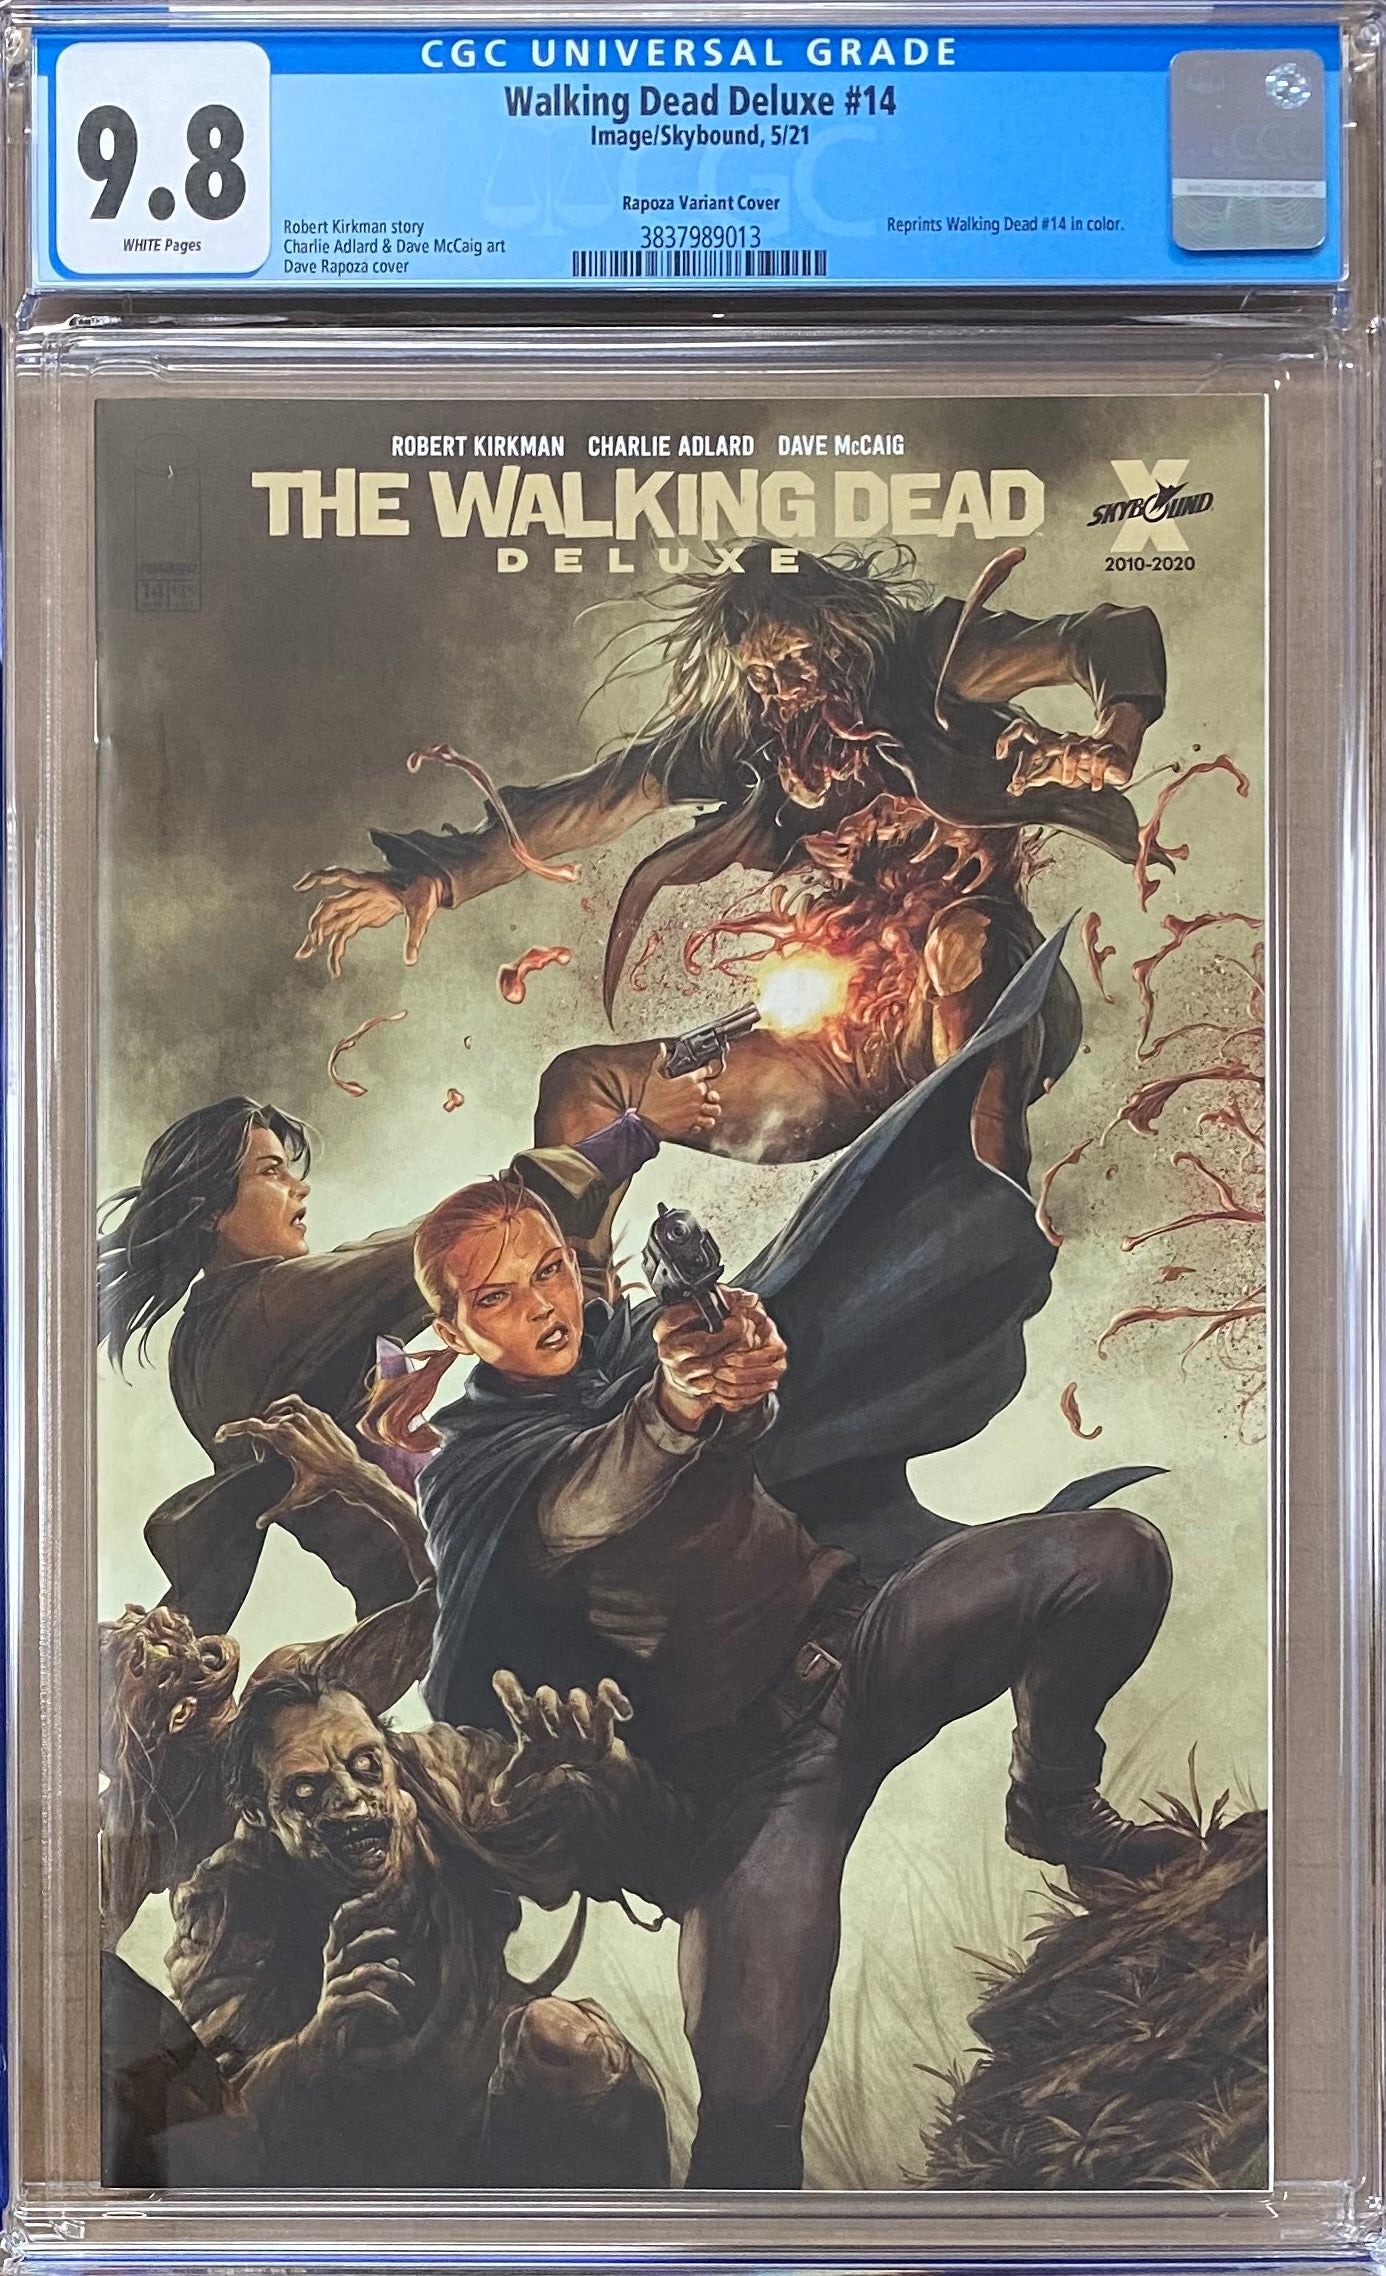 Walking Dead Deluxe #14 Rapoza Variant CGC 9.8